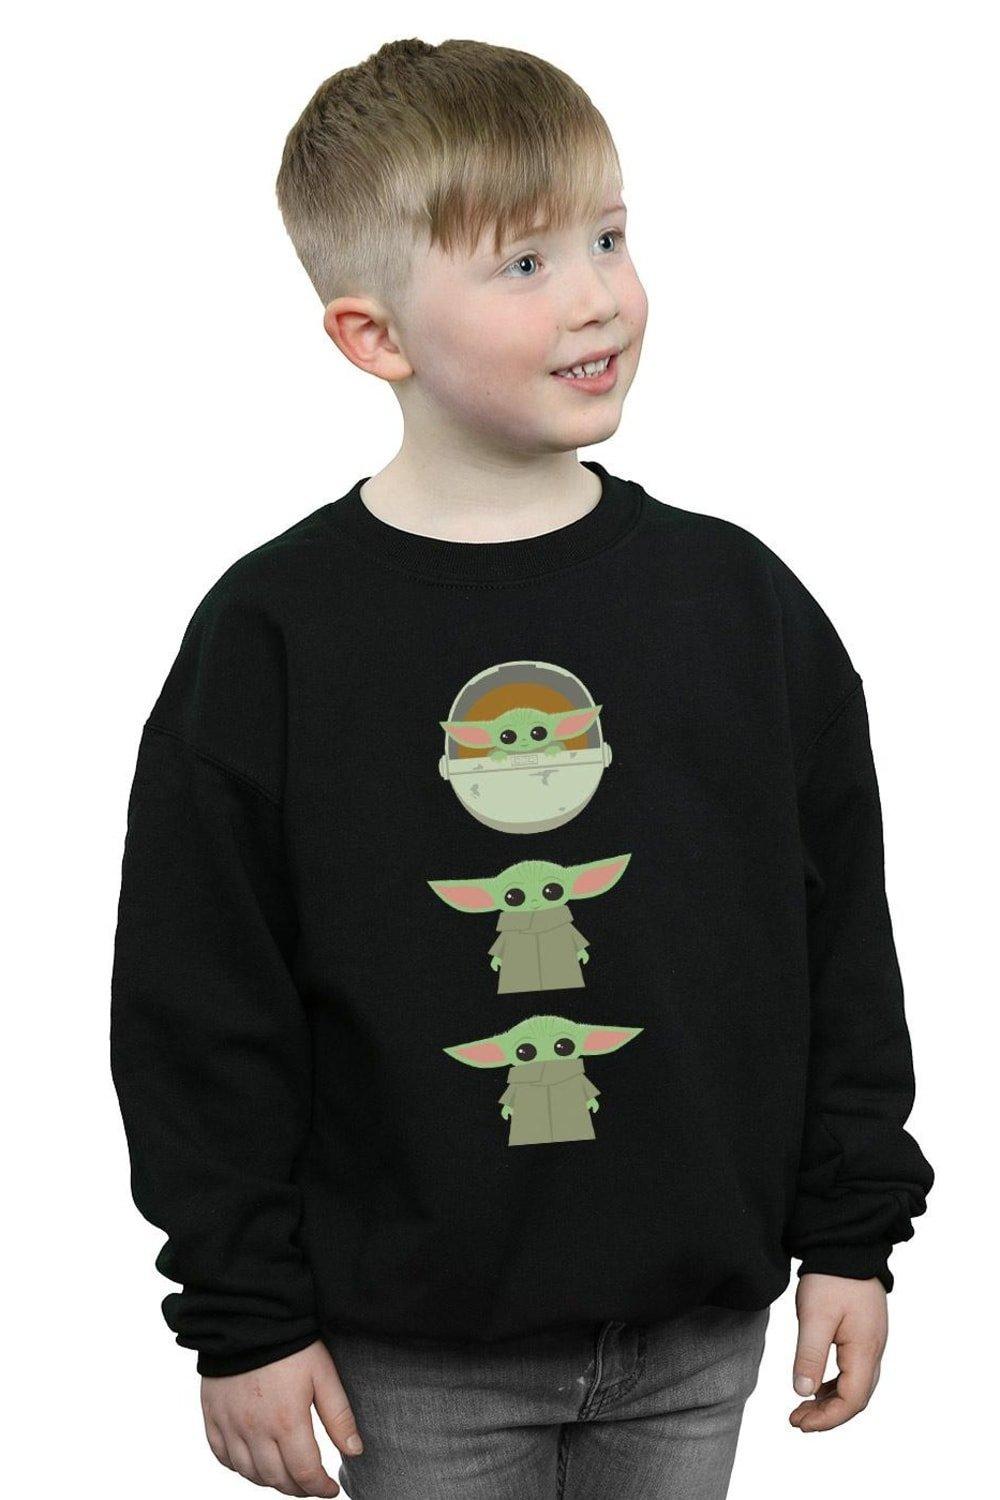 The Mandalorian The Child Posing Sweatshirt